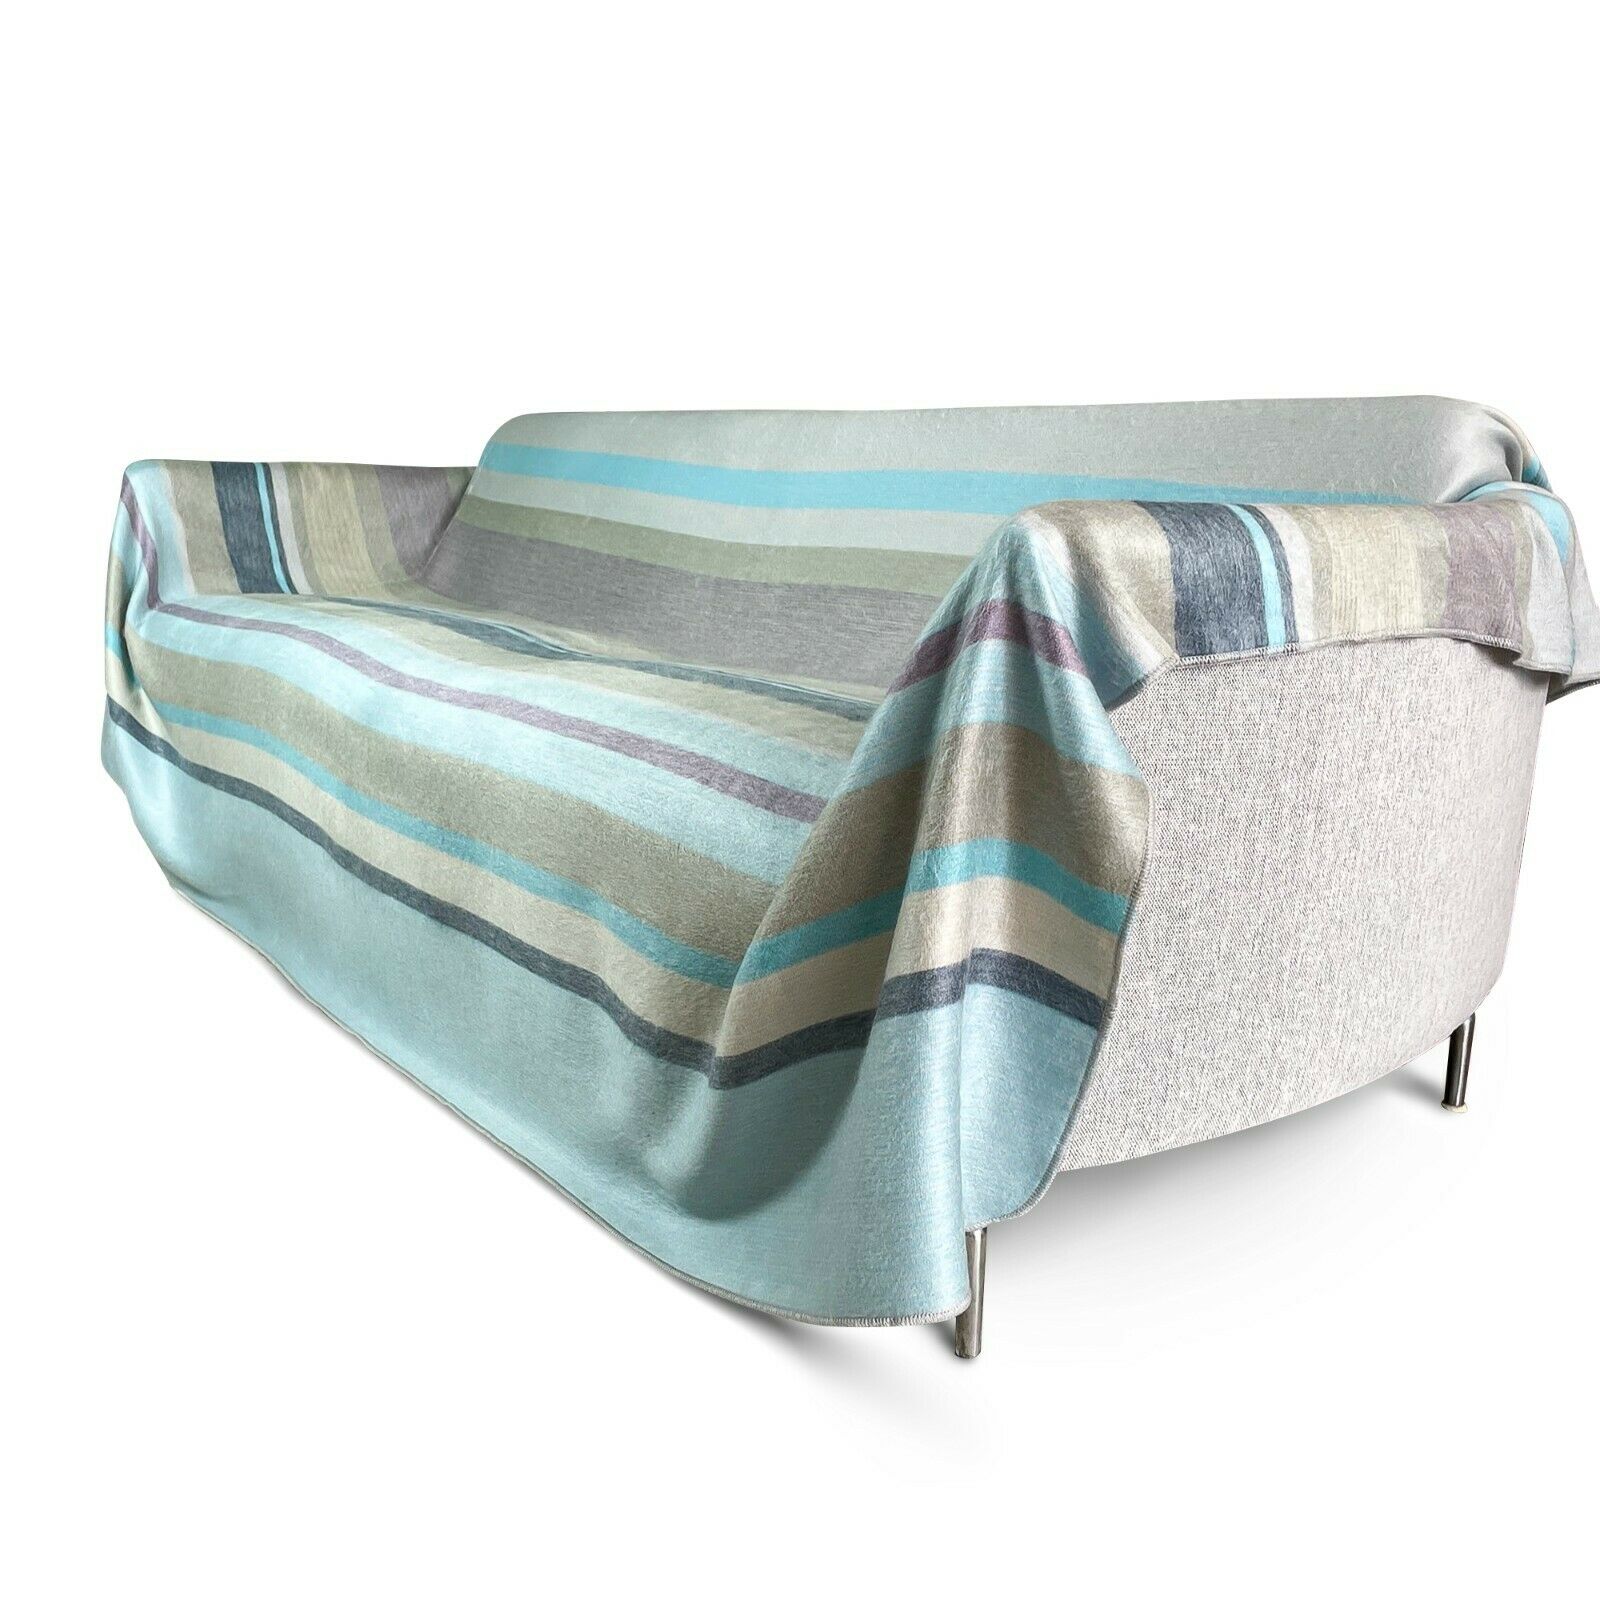 Tushin - Baby Alpaca Wool Throw Blanket / Sofa Cover - Queen 94.5" x 67" - striped cream/pistachio/turquoise/grey